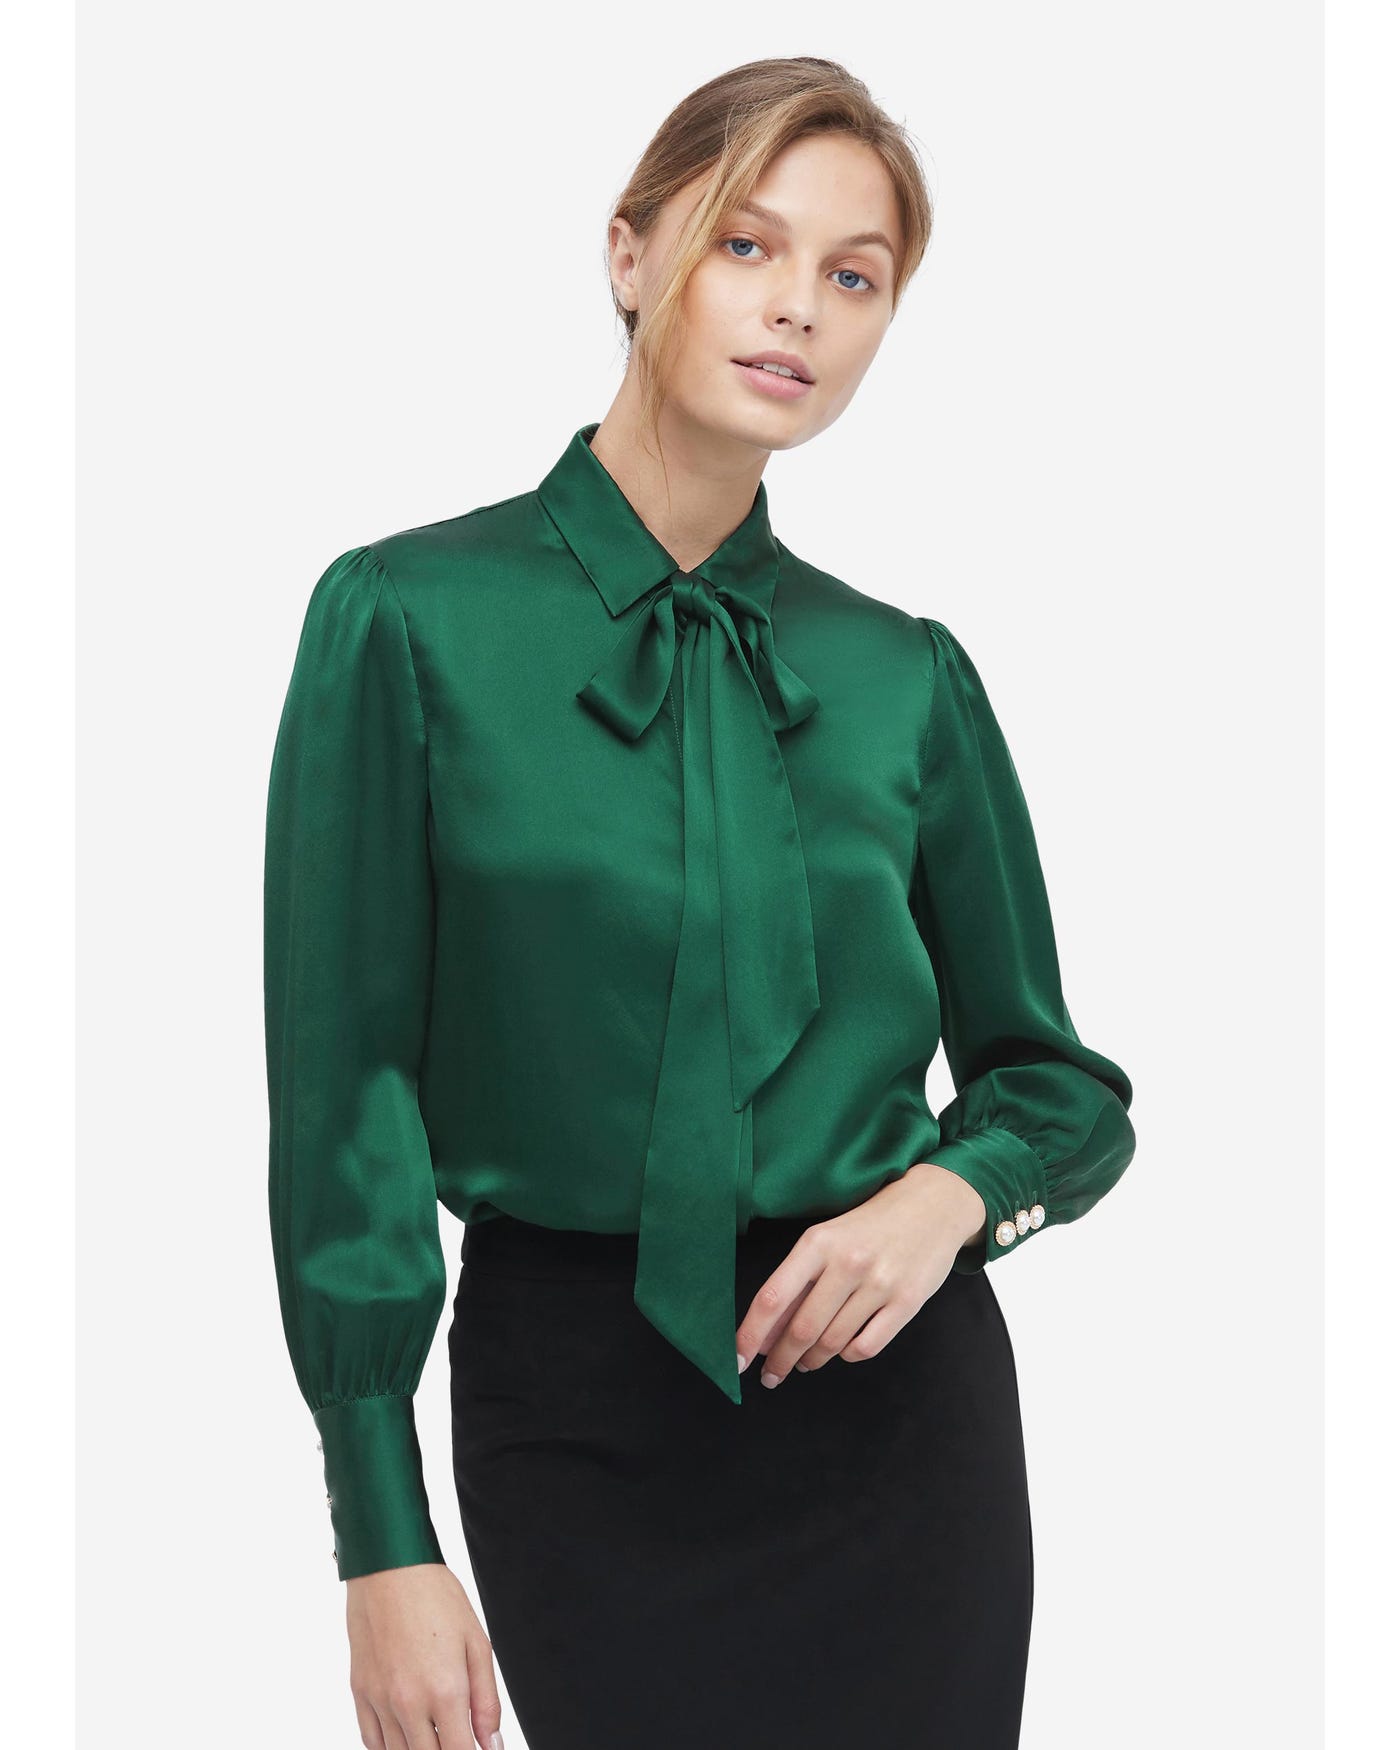 Silk Shirt - A Fashion Staple - ExpoShirts.com